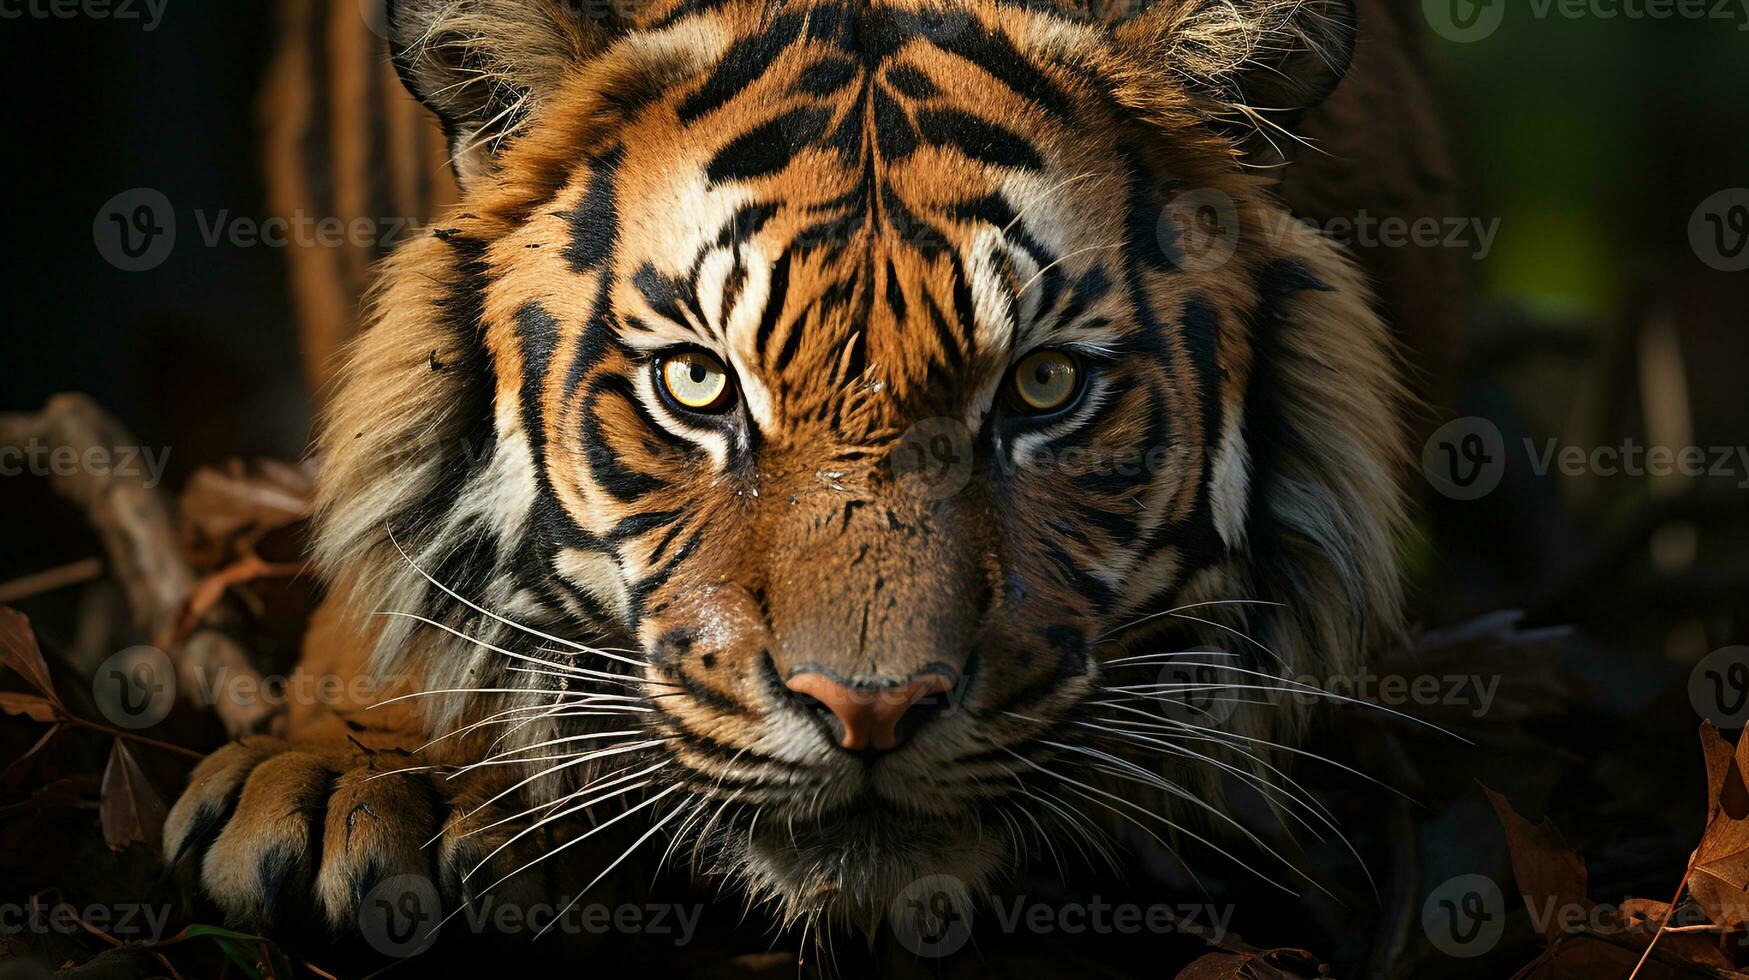 International Tiger Day photo